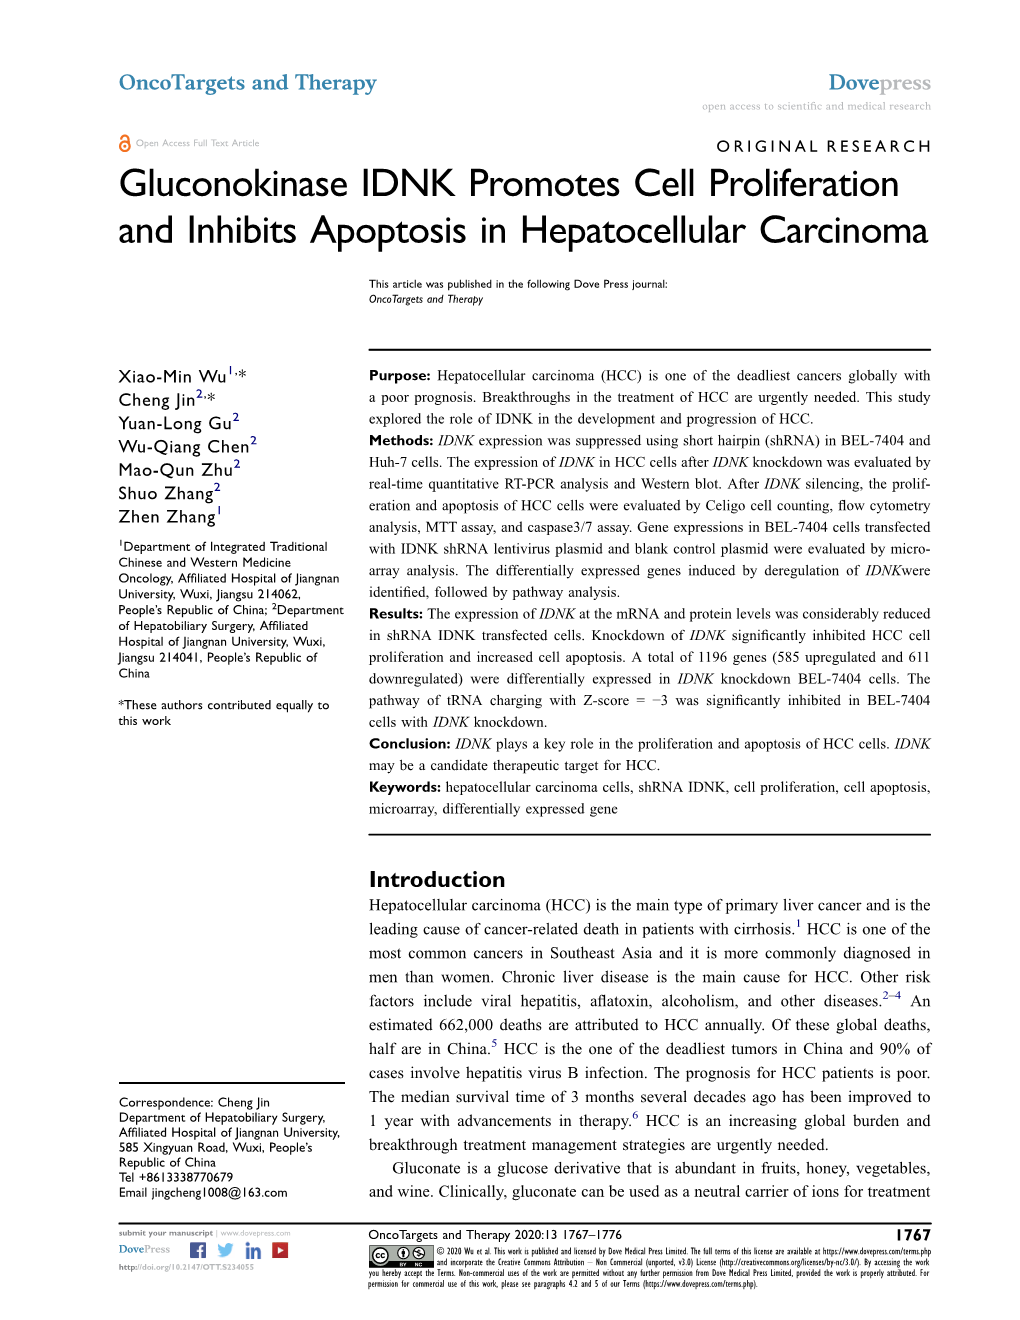 Gluconokinase IDNK Promotes Cell Proliferation and Inhibits Apoptosis in Hepatocellular Carcinoma